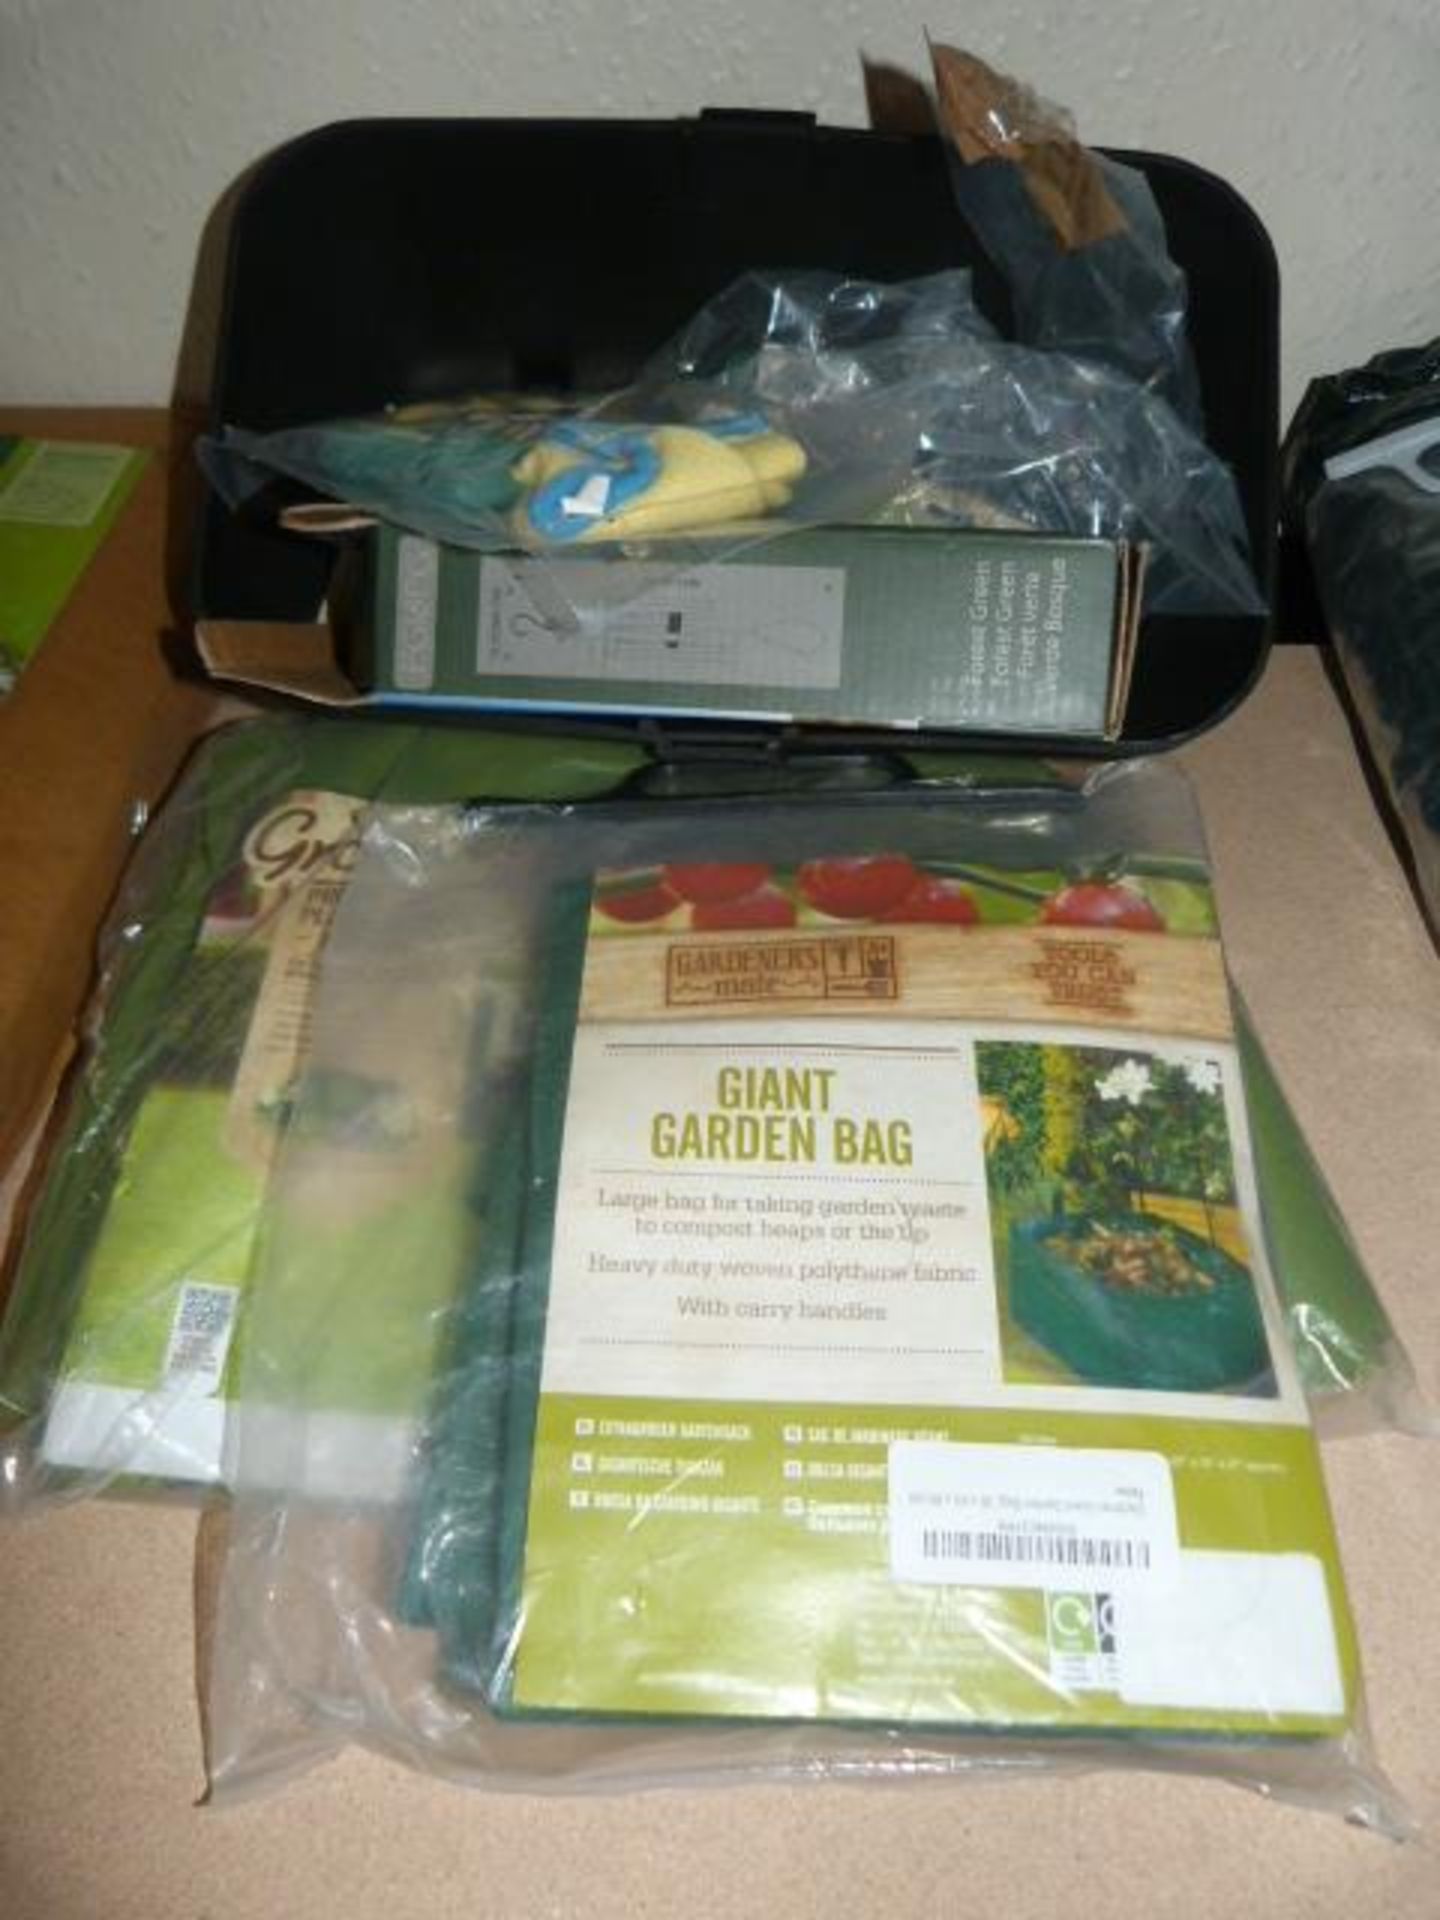 *Giant Gardening Bag, Protective Plant Jacket (Medium), Tray of Gardening Gloves, Wind Chimes